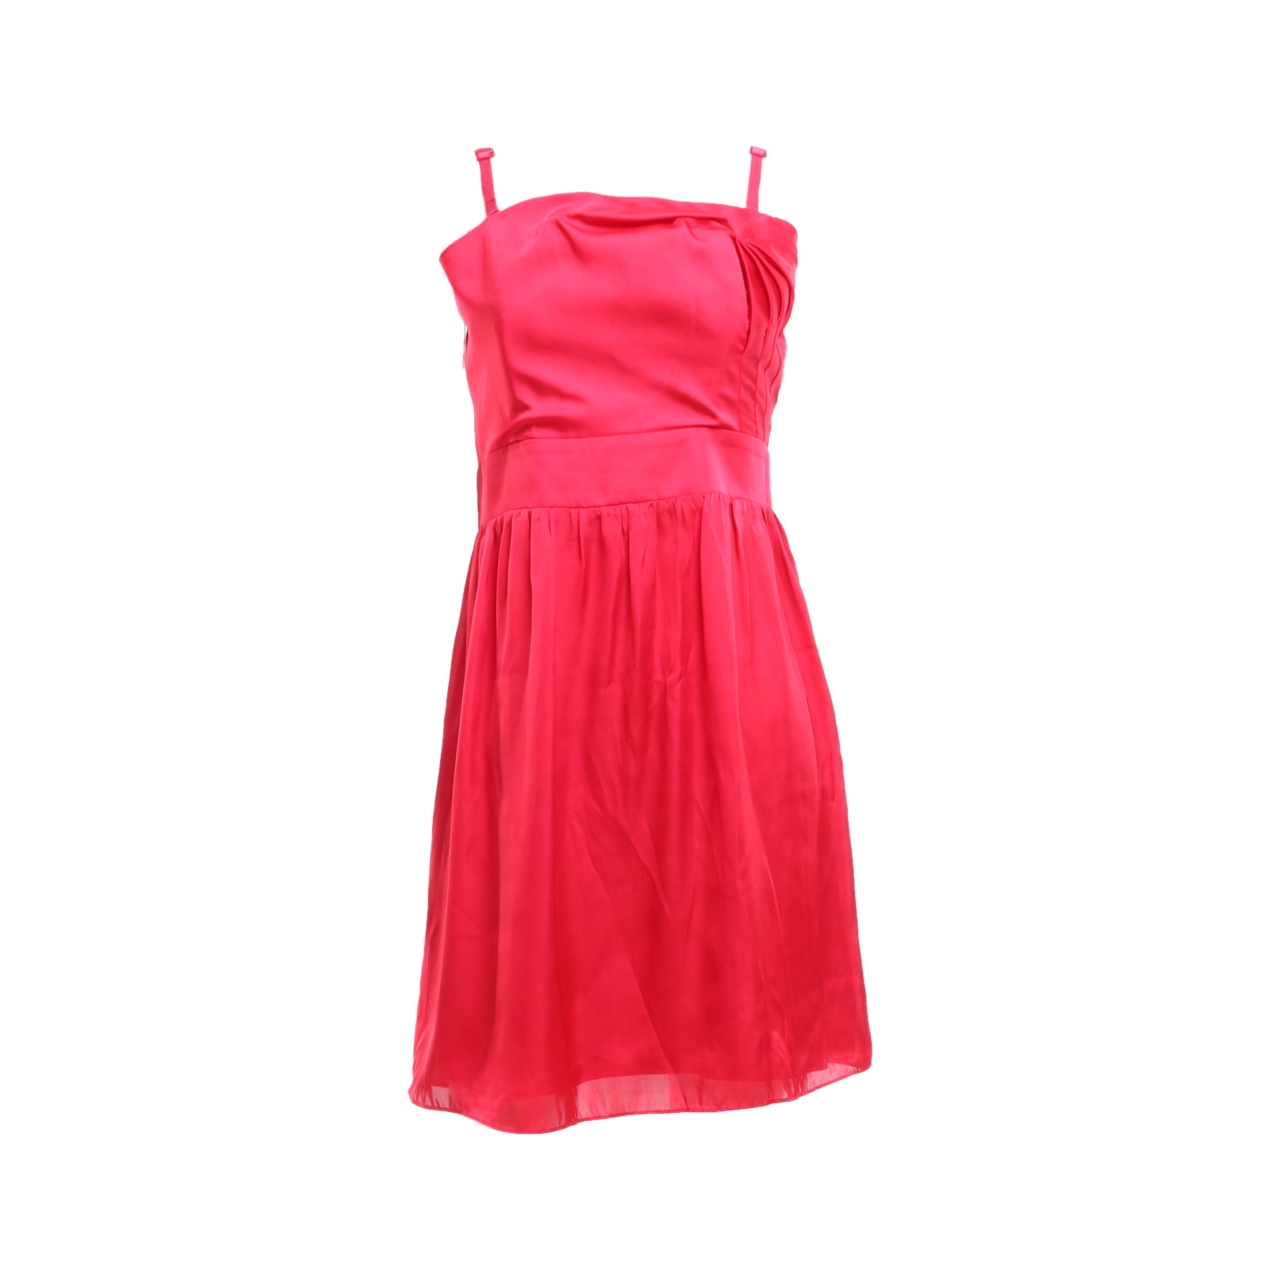 Cooper ST Cherry Red Tube Mini Dress